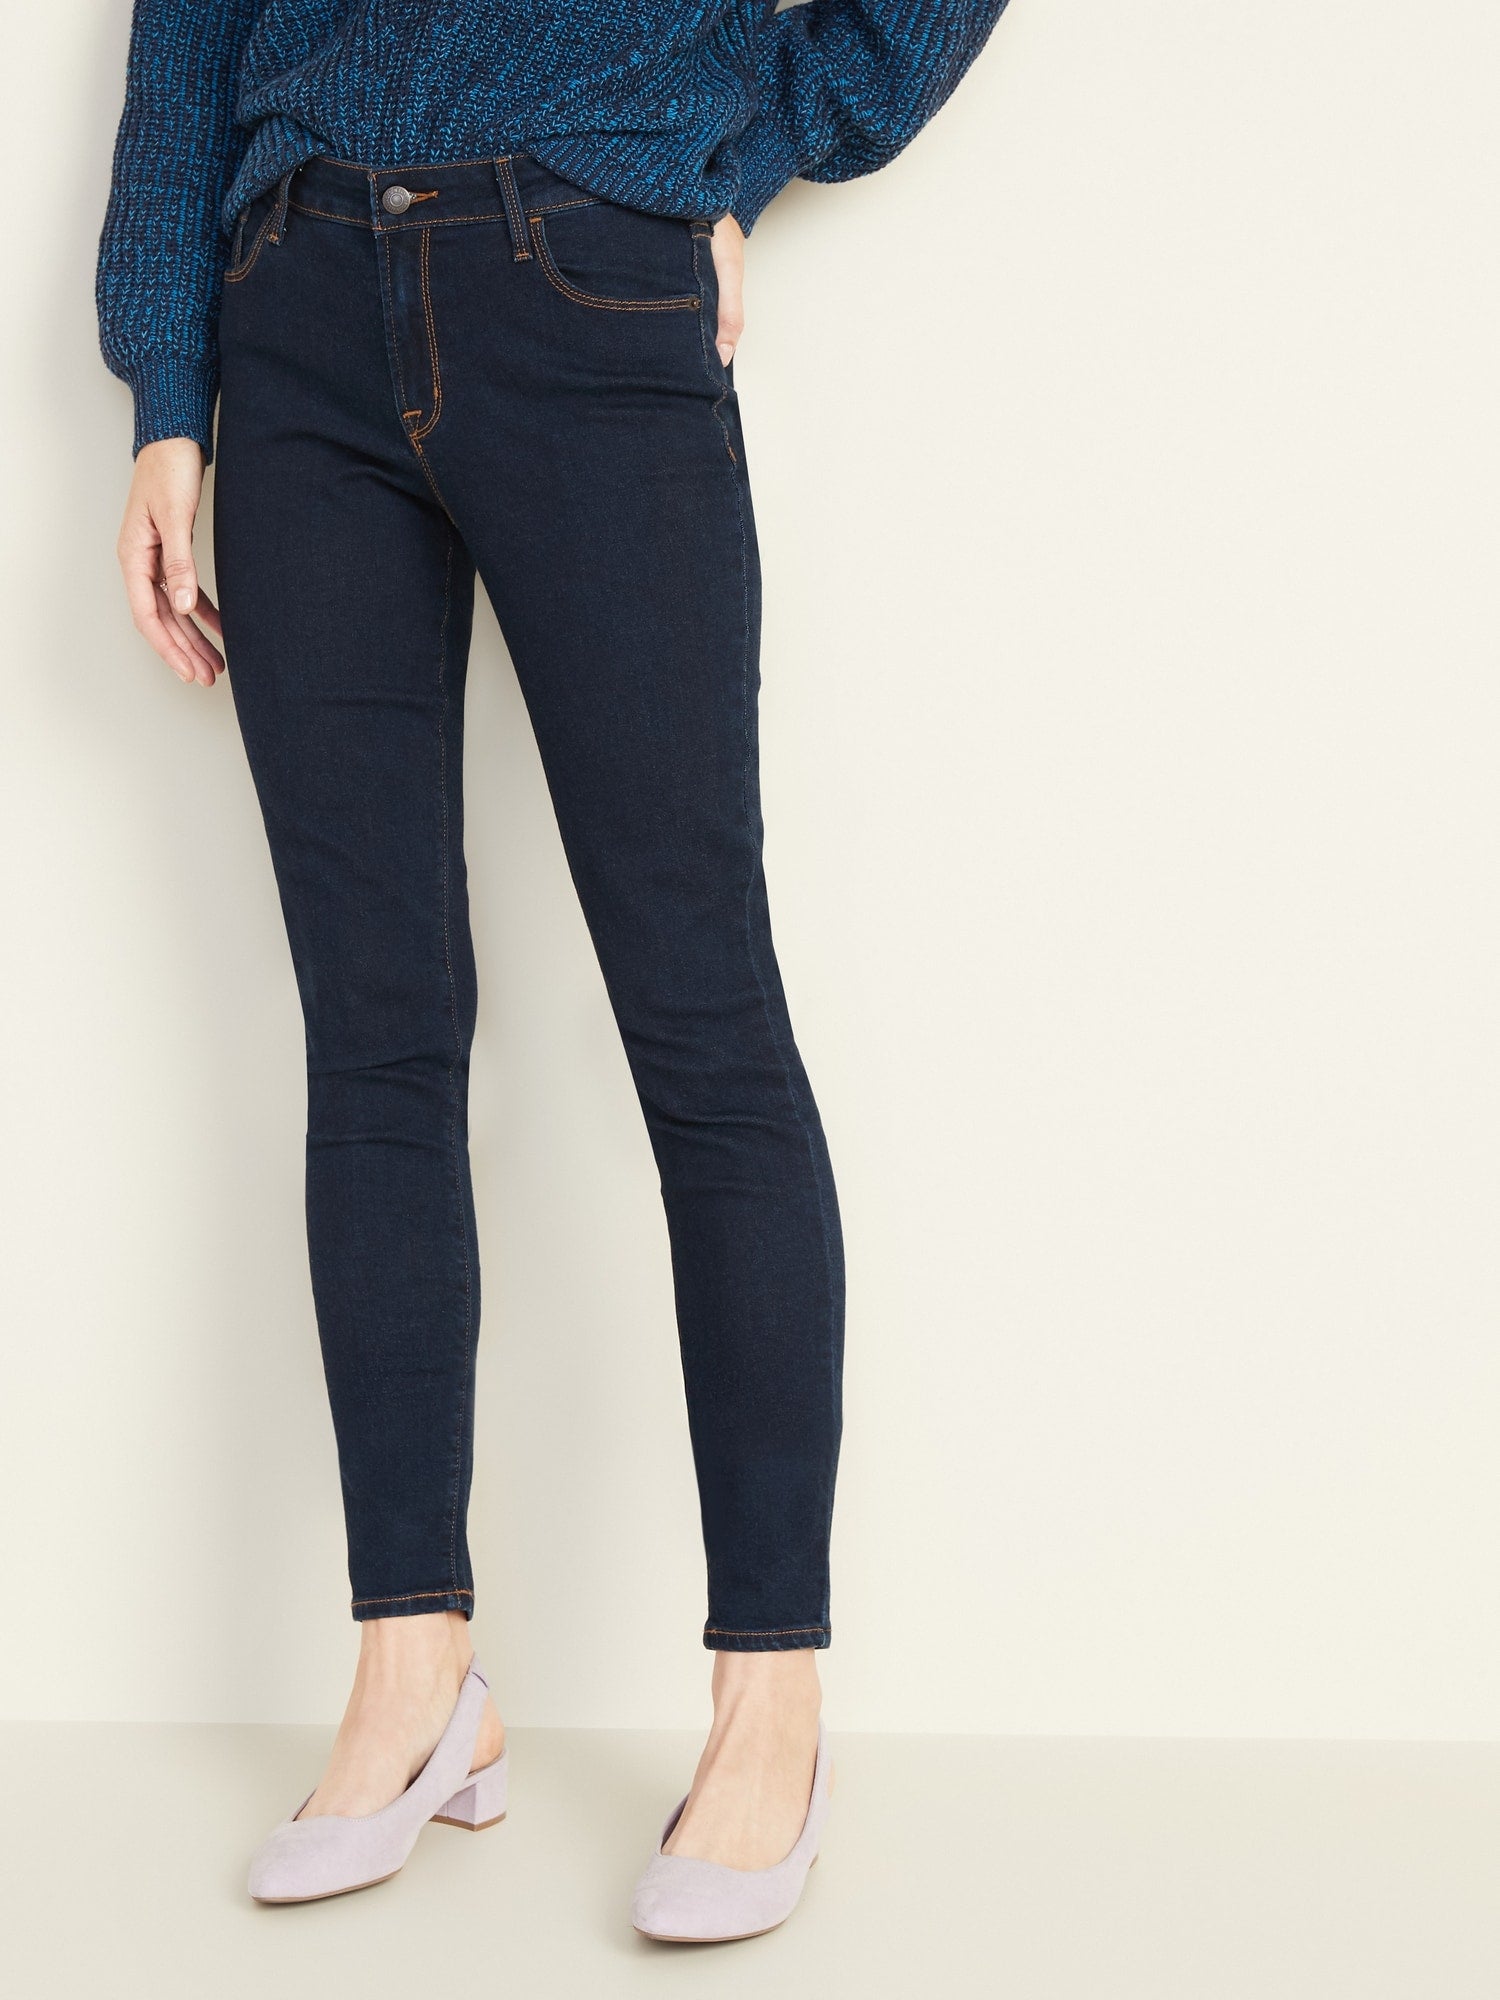 OLD NAVY HIGH-WAISTED Rockstar Super-Skinny Jeans Style-Alora Size 20  £15.79 - PicClick UK